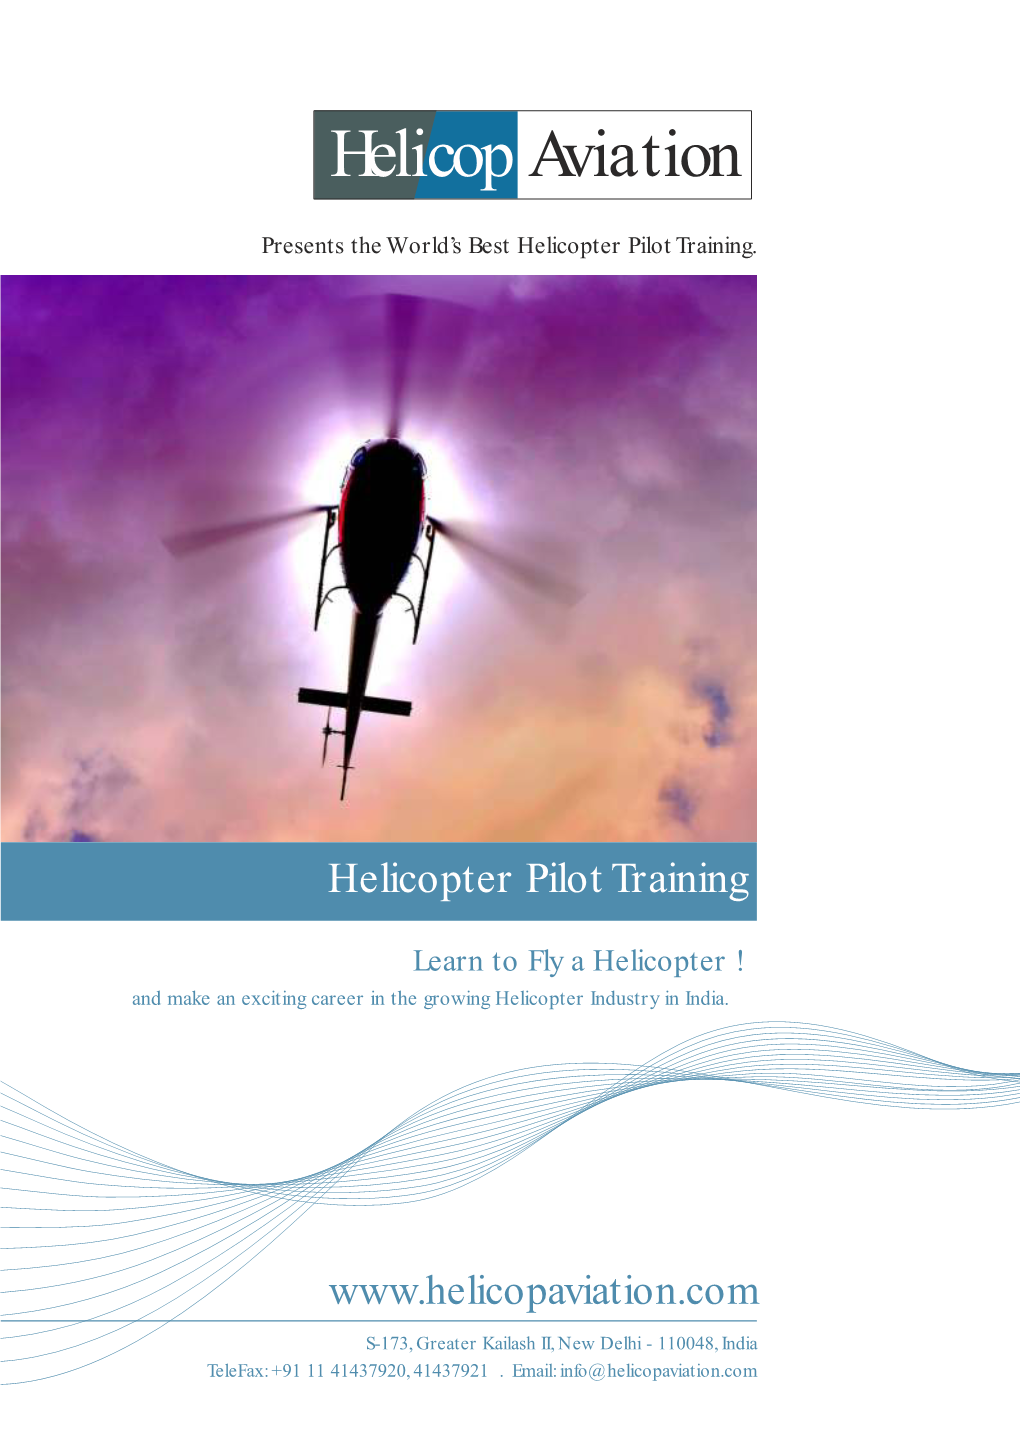 Helicop Aviation Brochure